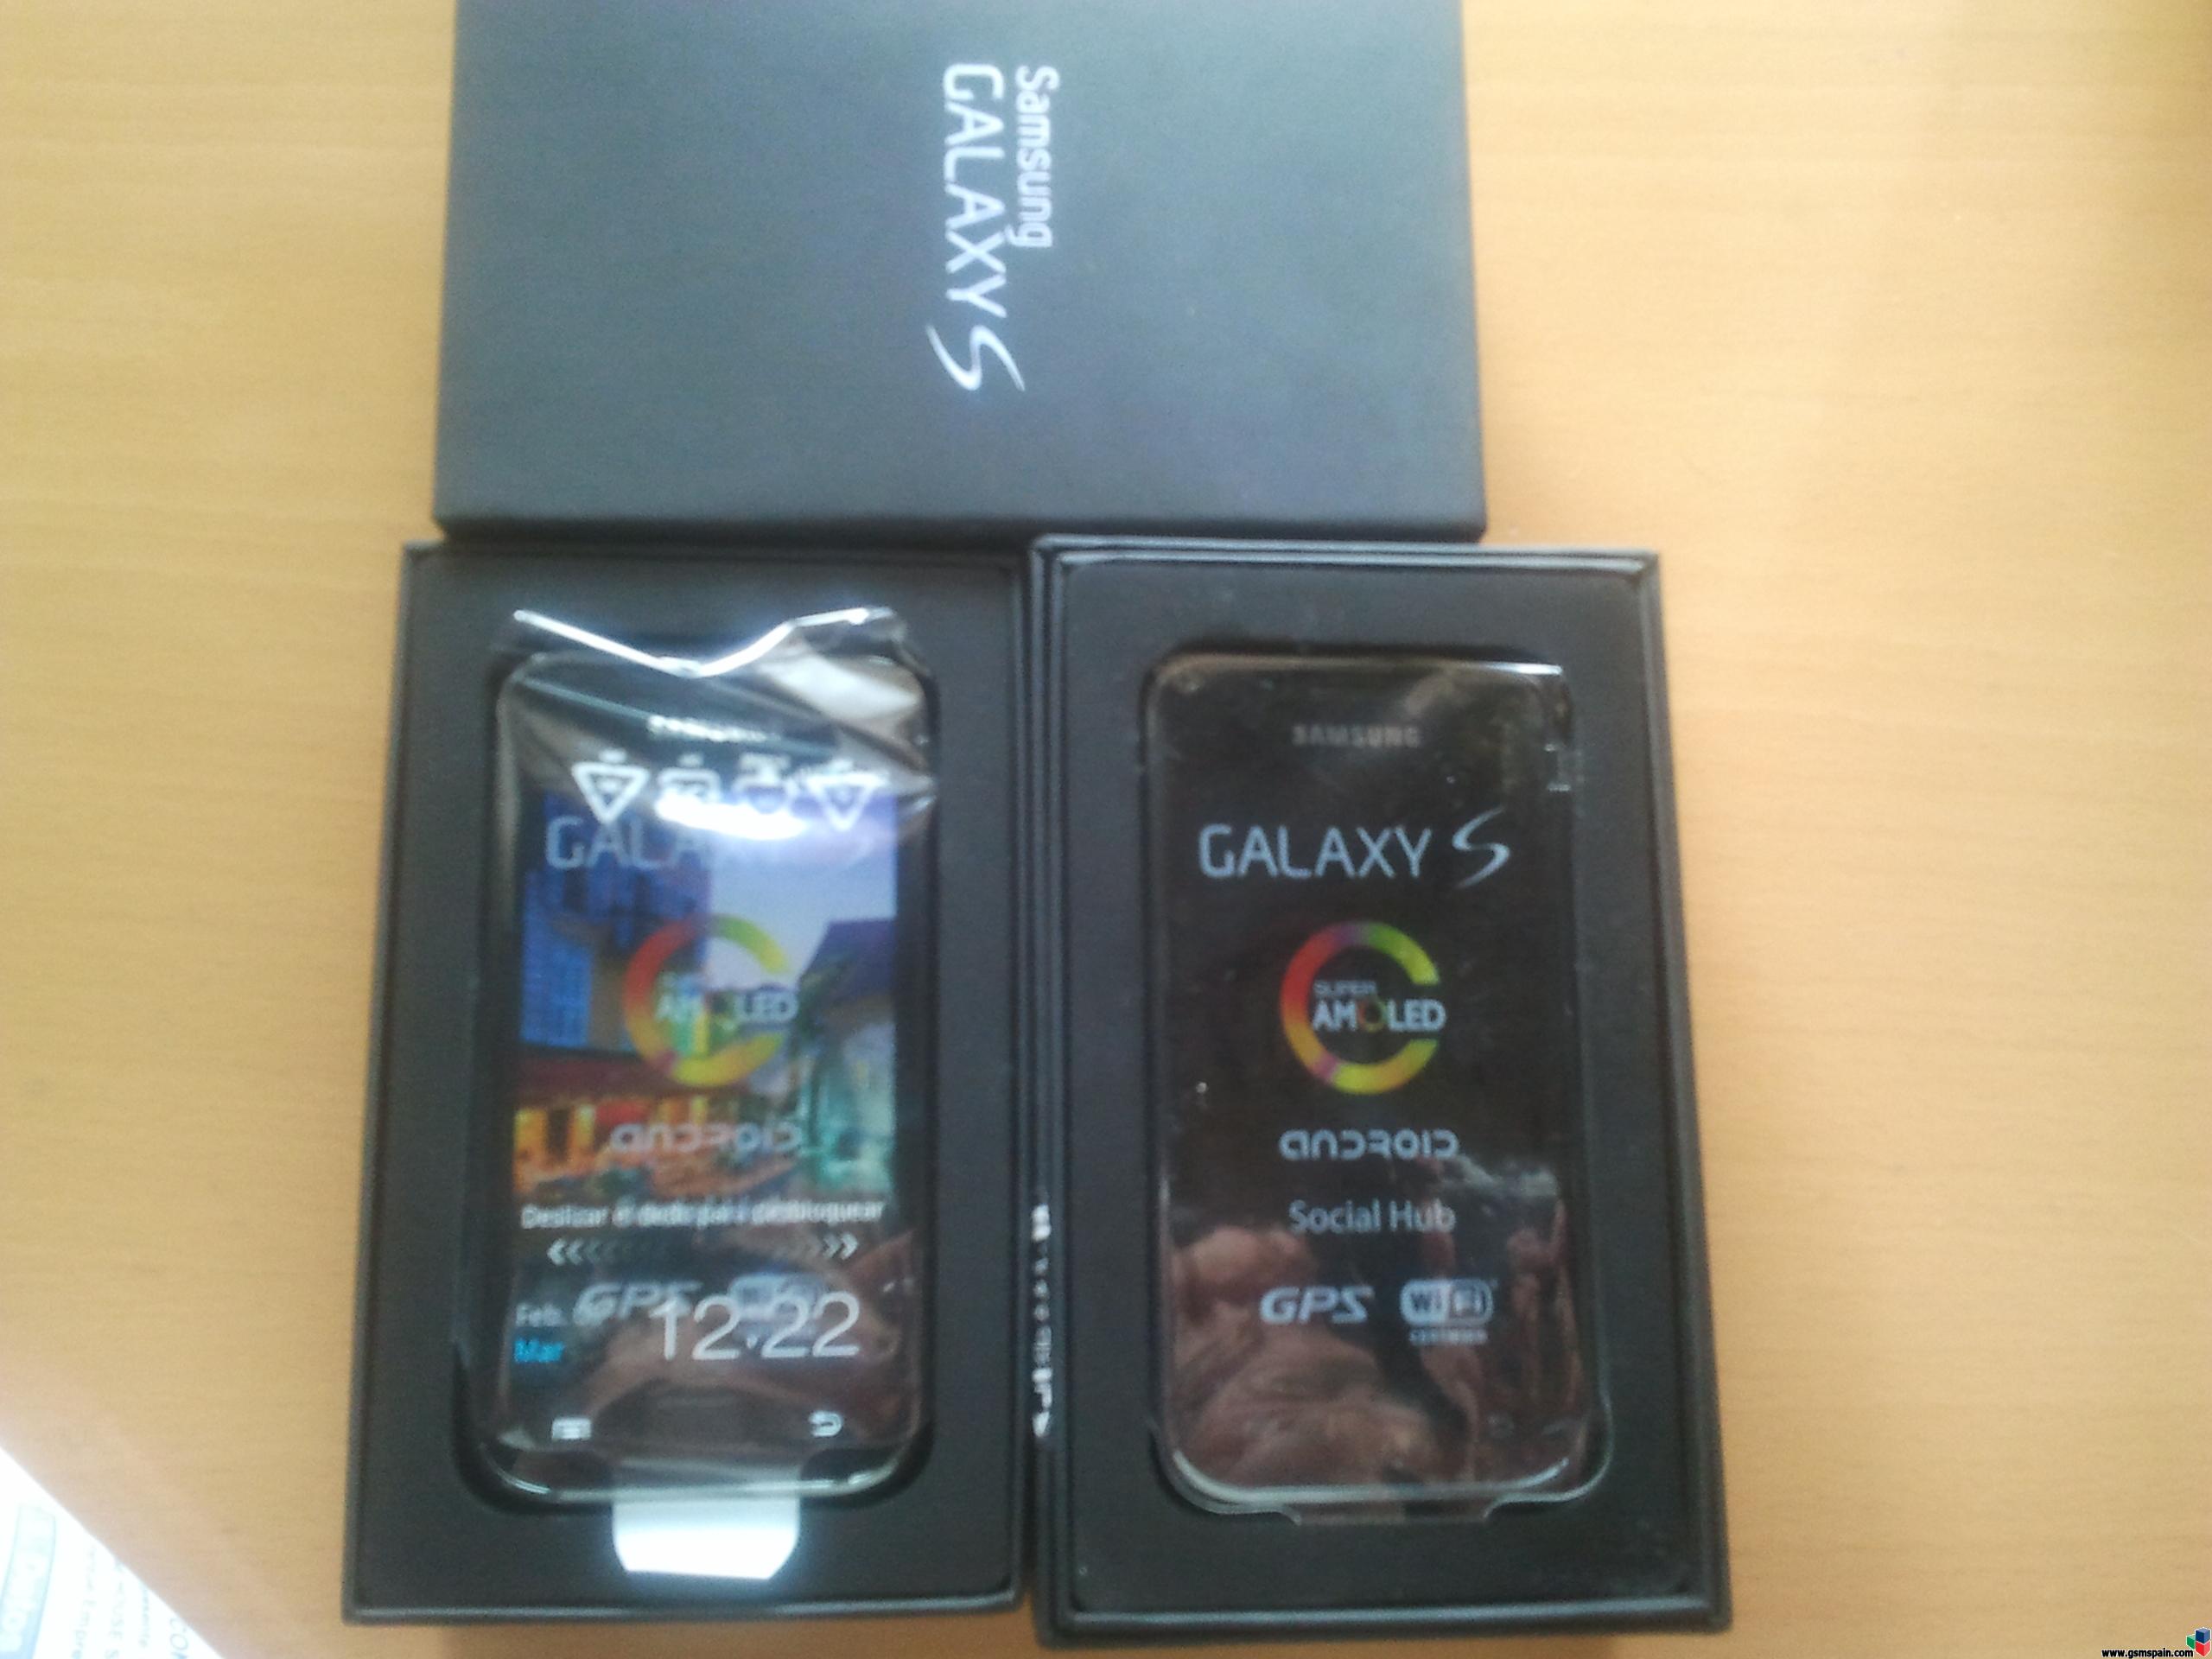 [VENDO] Samsung galaxy s 8gb yoigo 300 